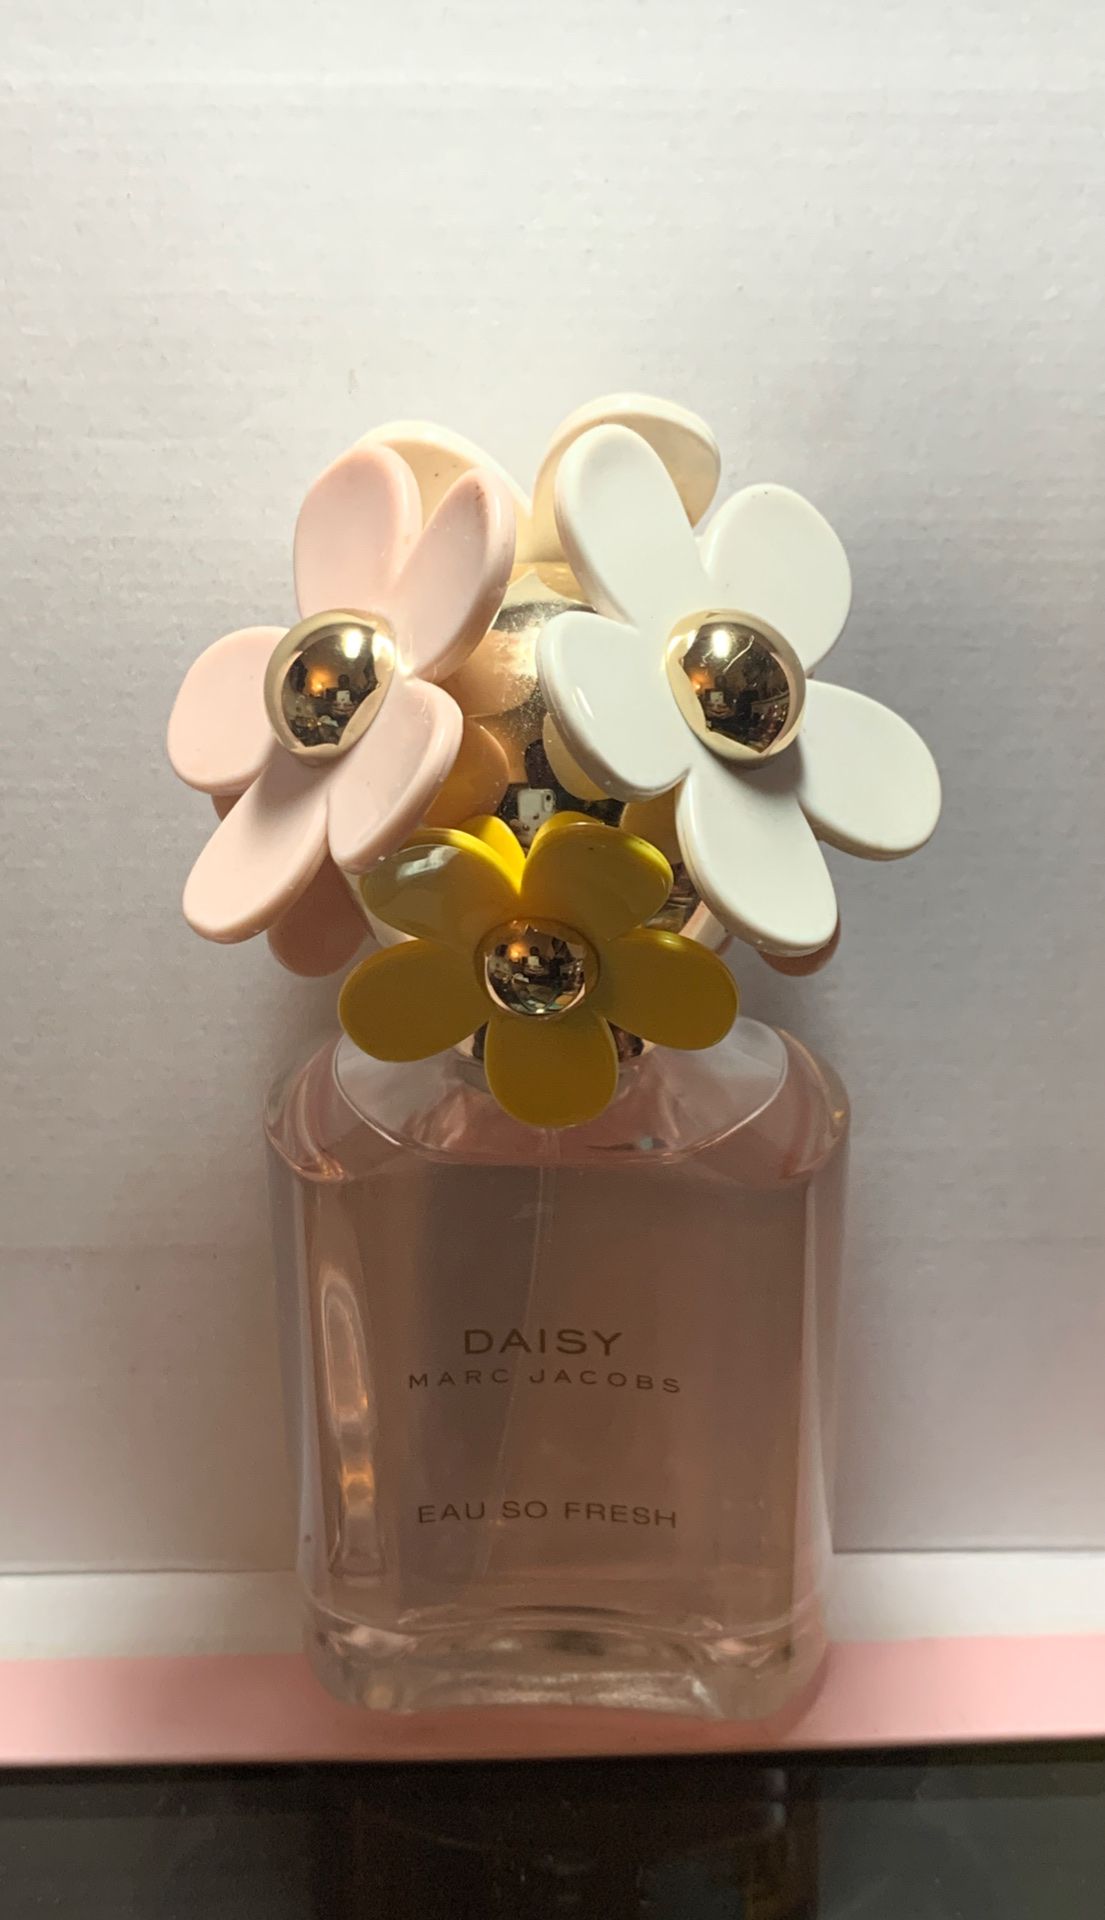 Daisy Marc Jacobs eau so fresh 2.5 fl oz perfume